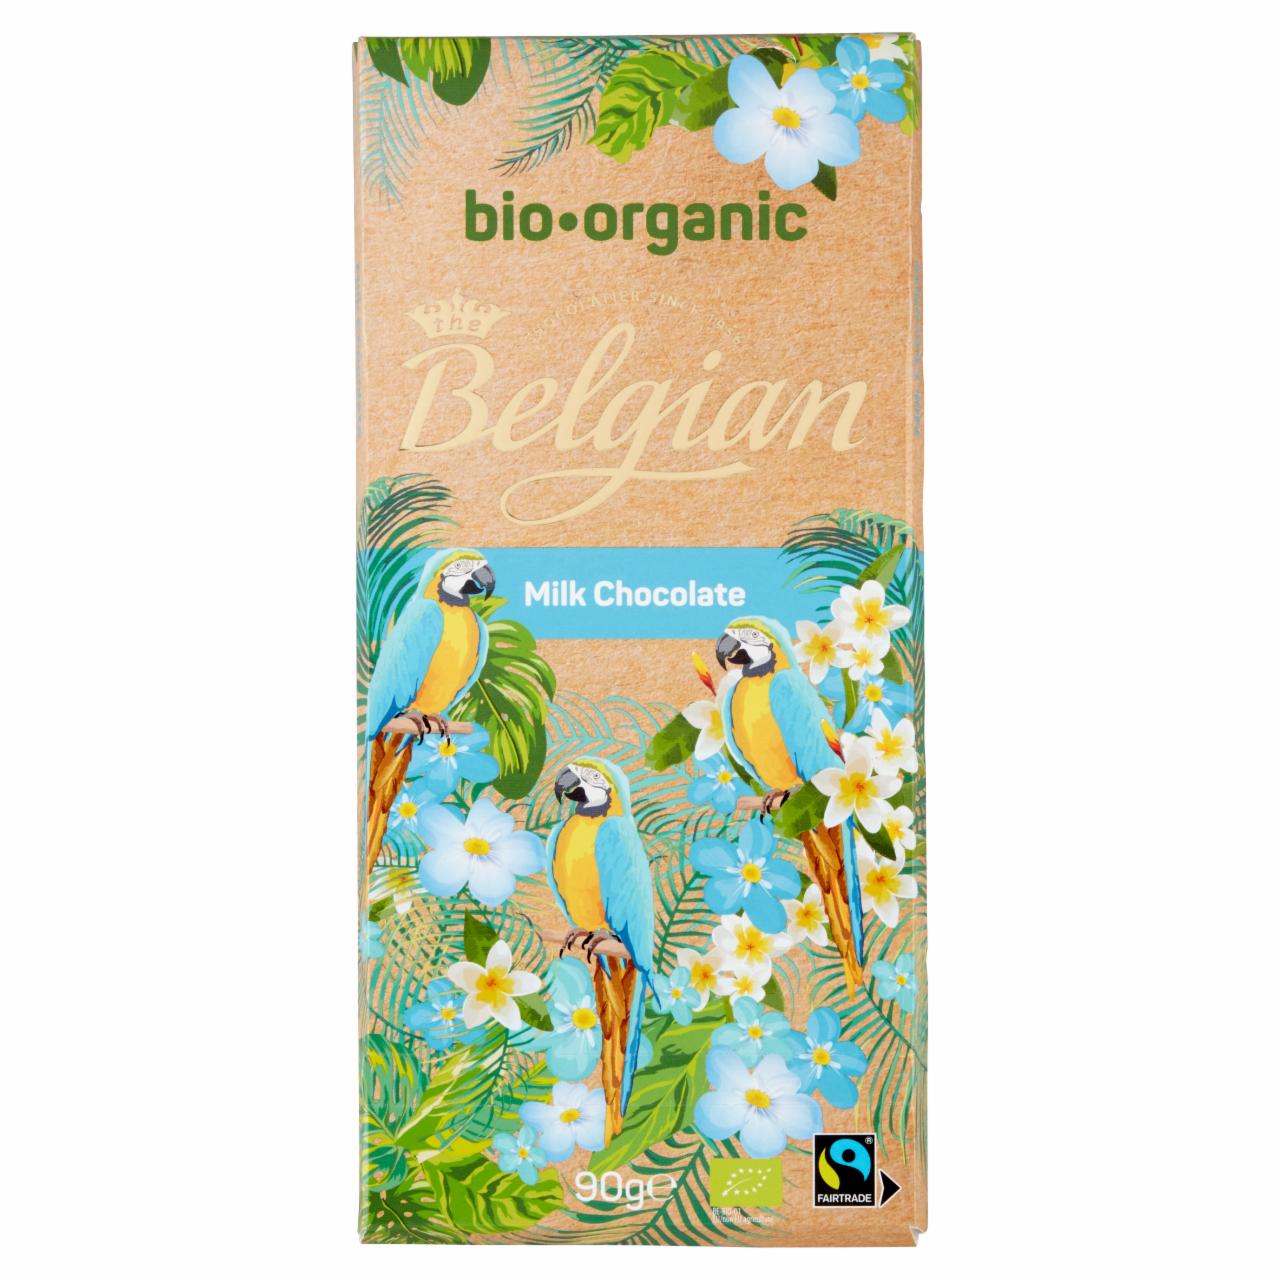 Képek - Belgian BIO tejcsokoládé 90 g